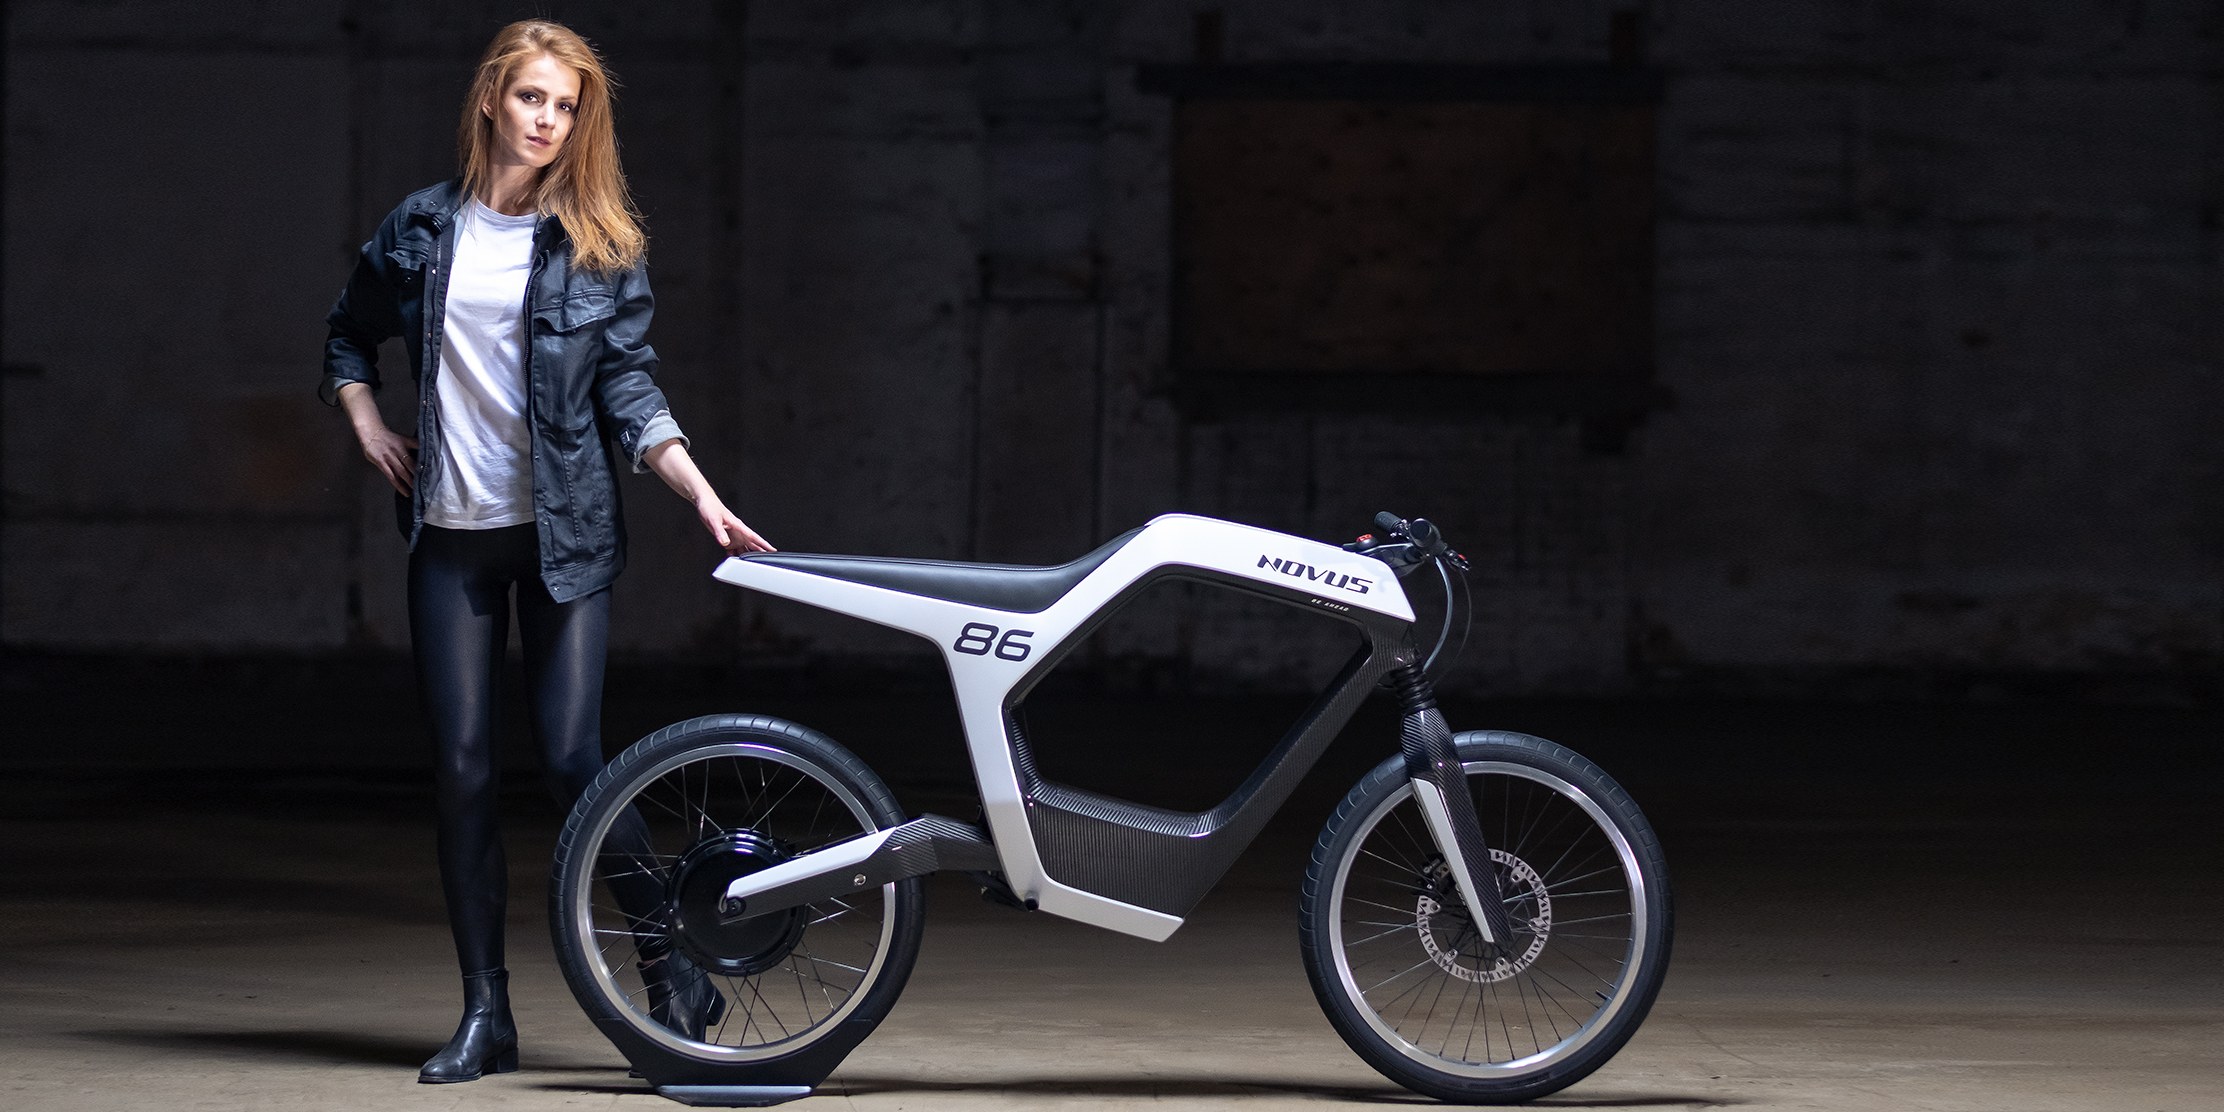 Novus electric motorcycle has stunning 